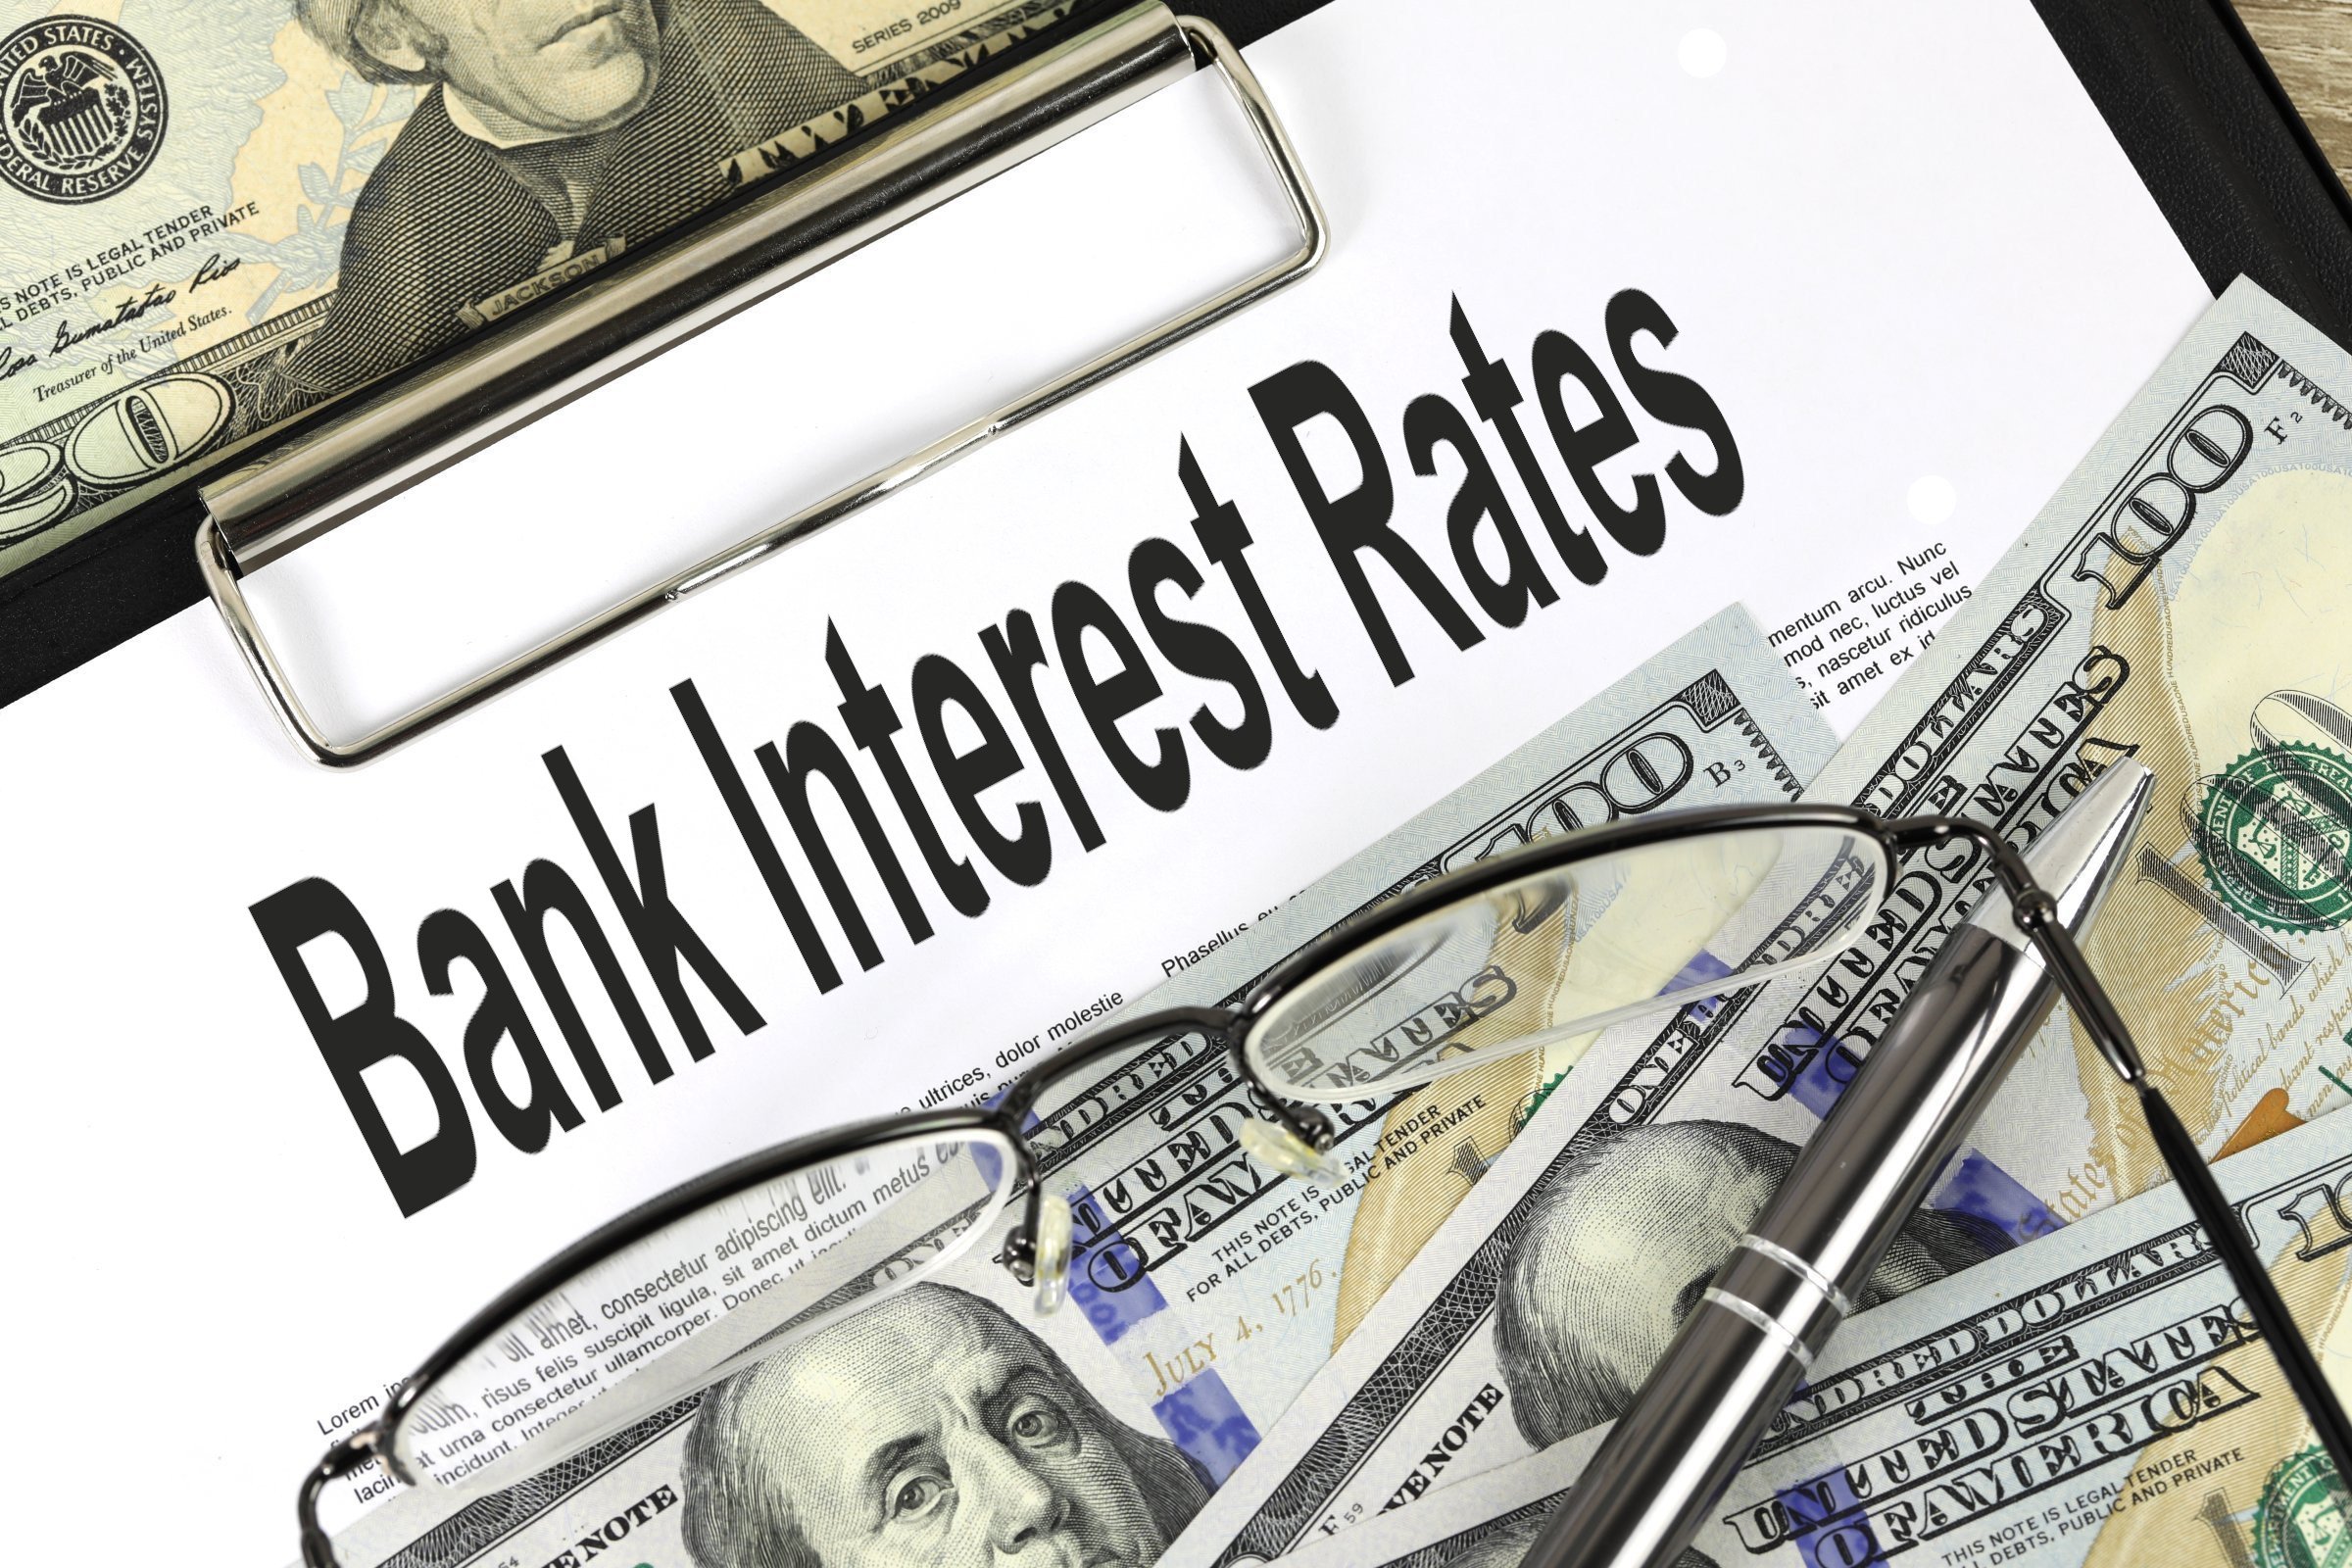 bank interest rates